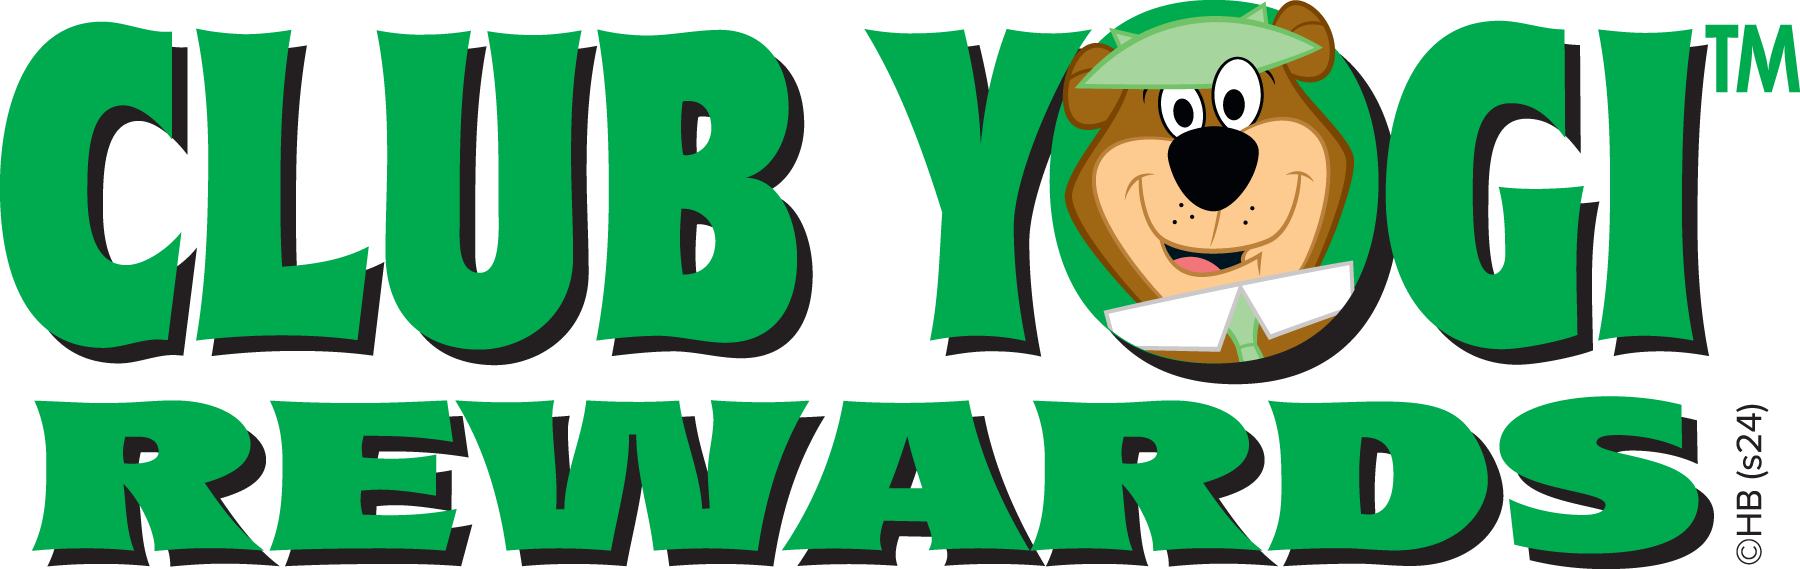 CYRewards-logo-green-PMS-2024-L